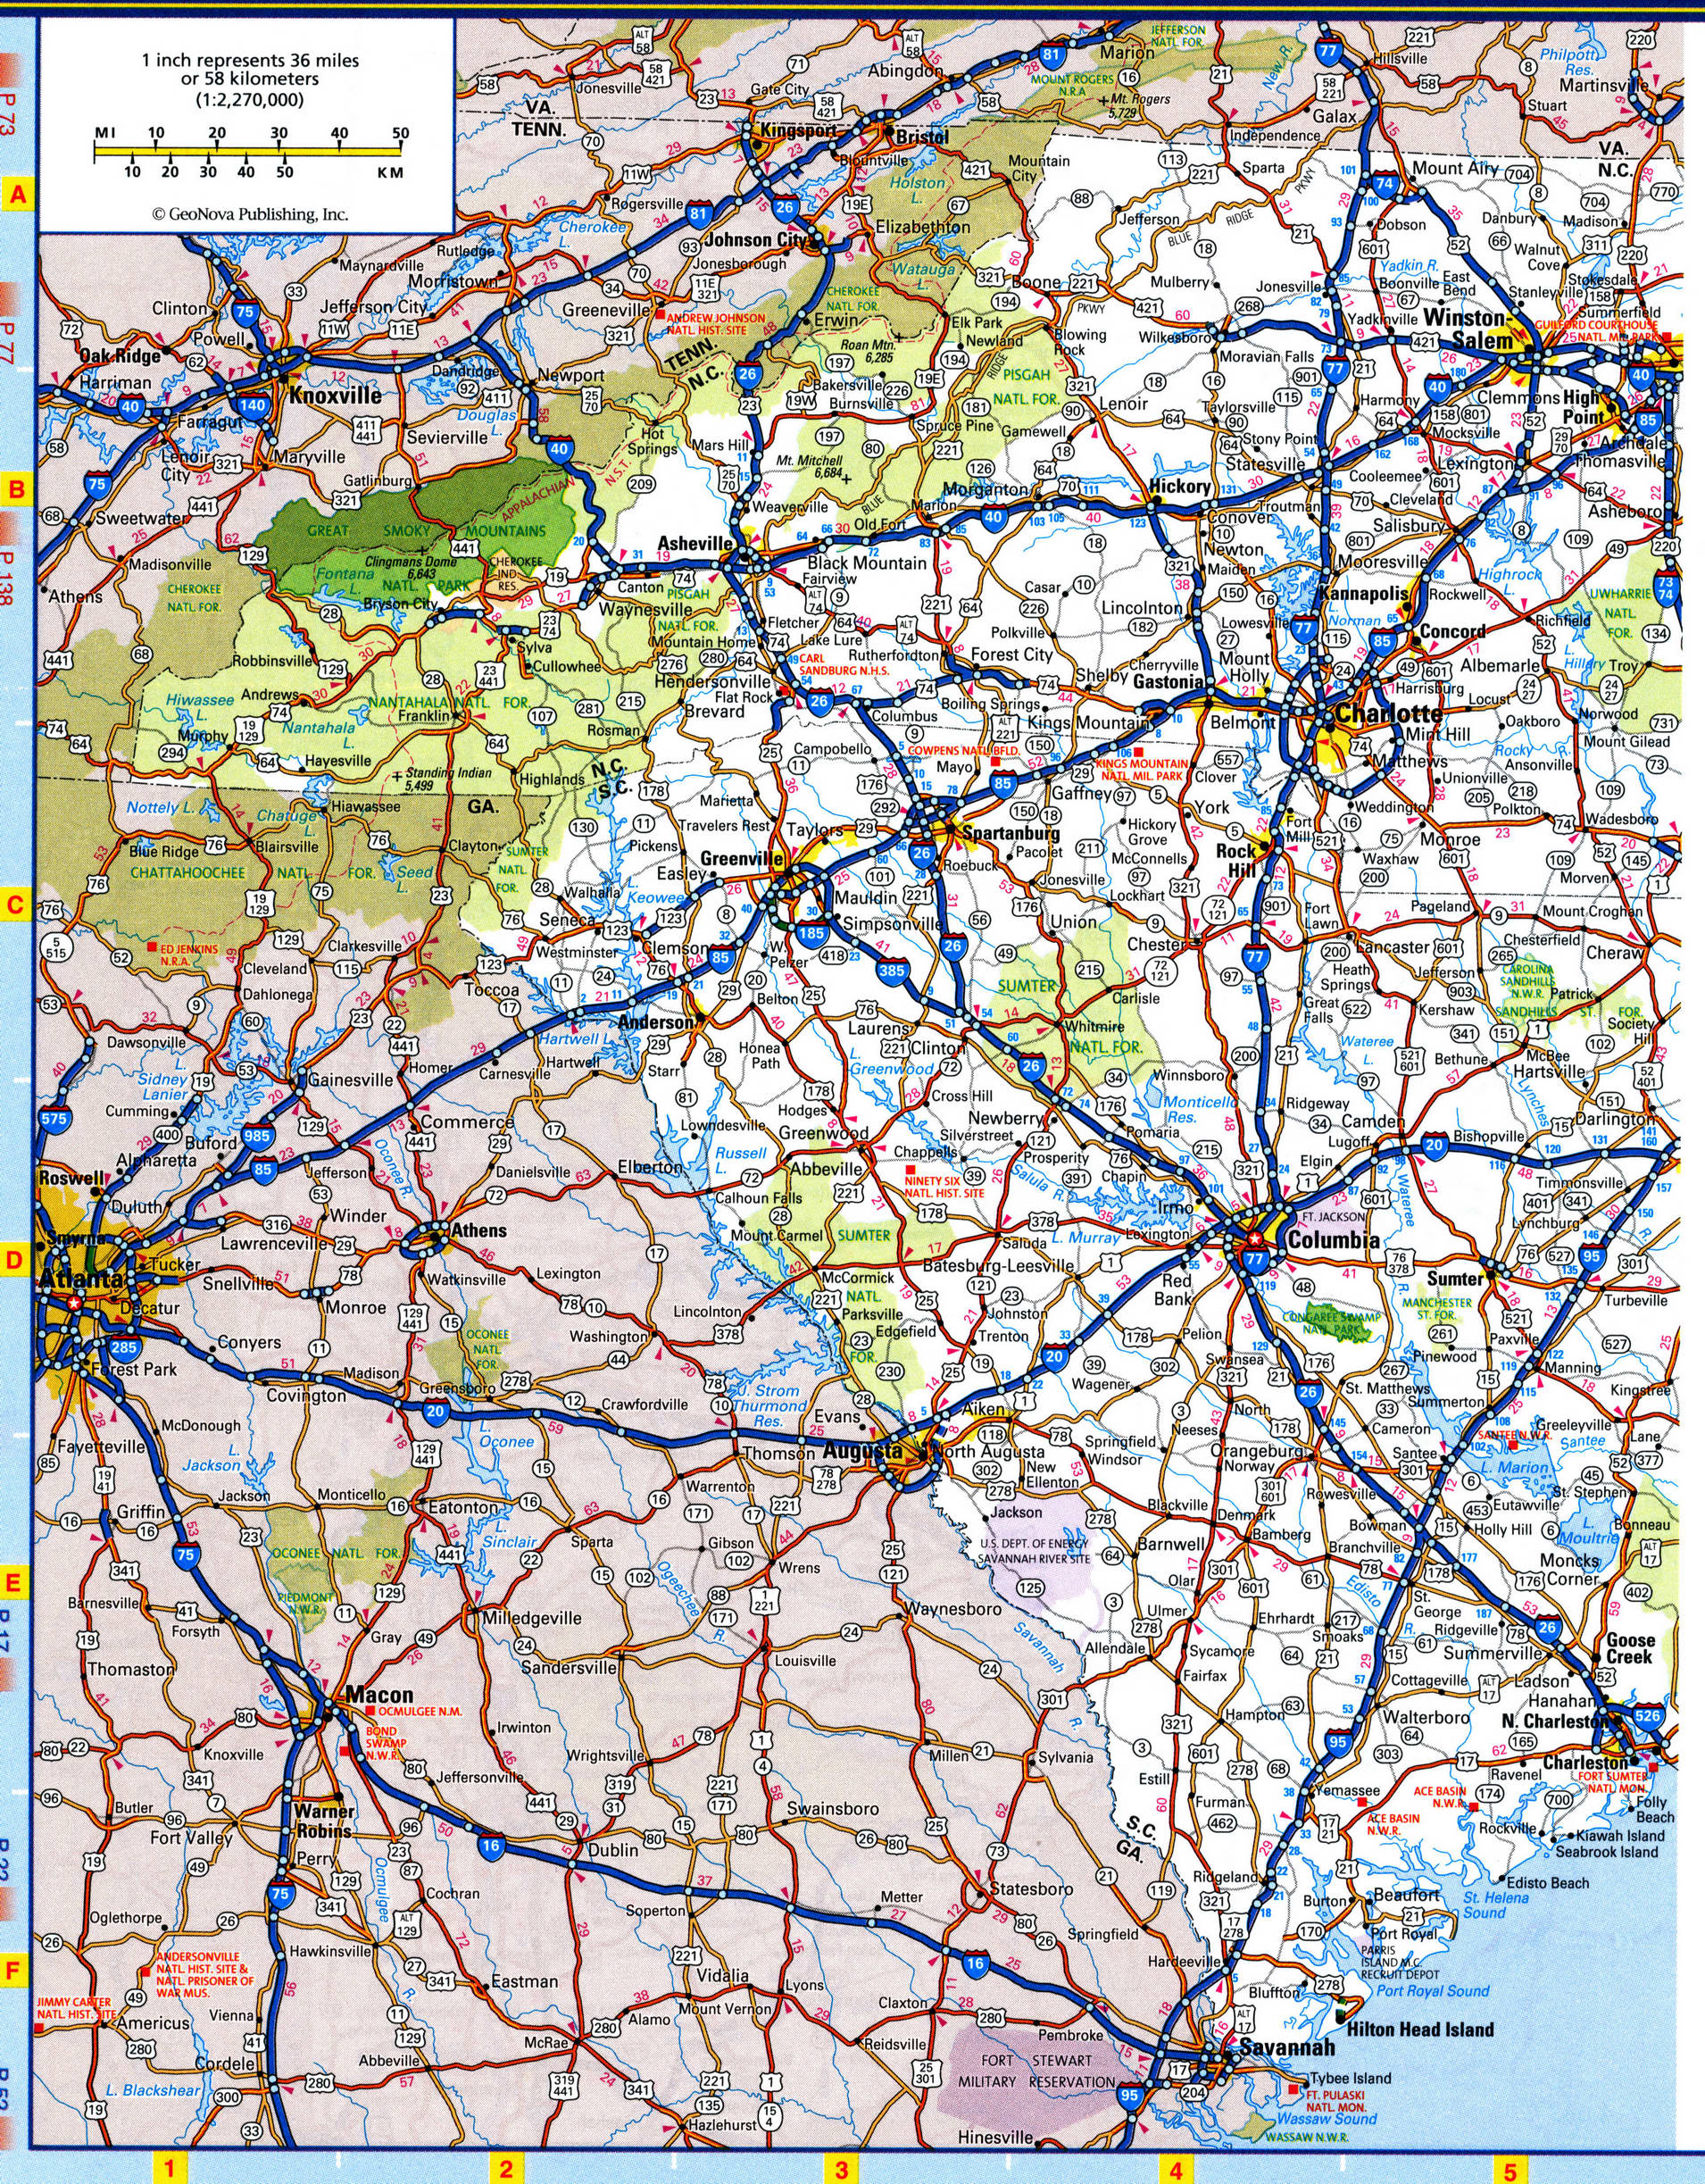 North Carolina map with national parks